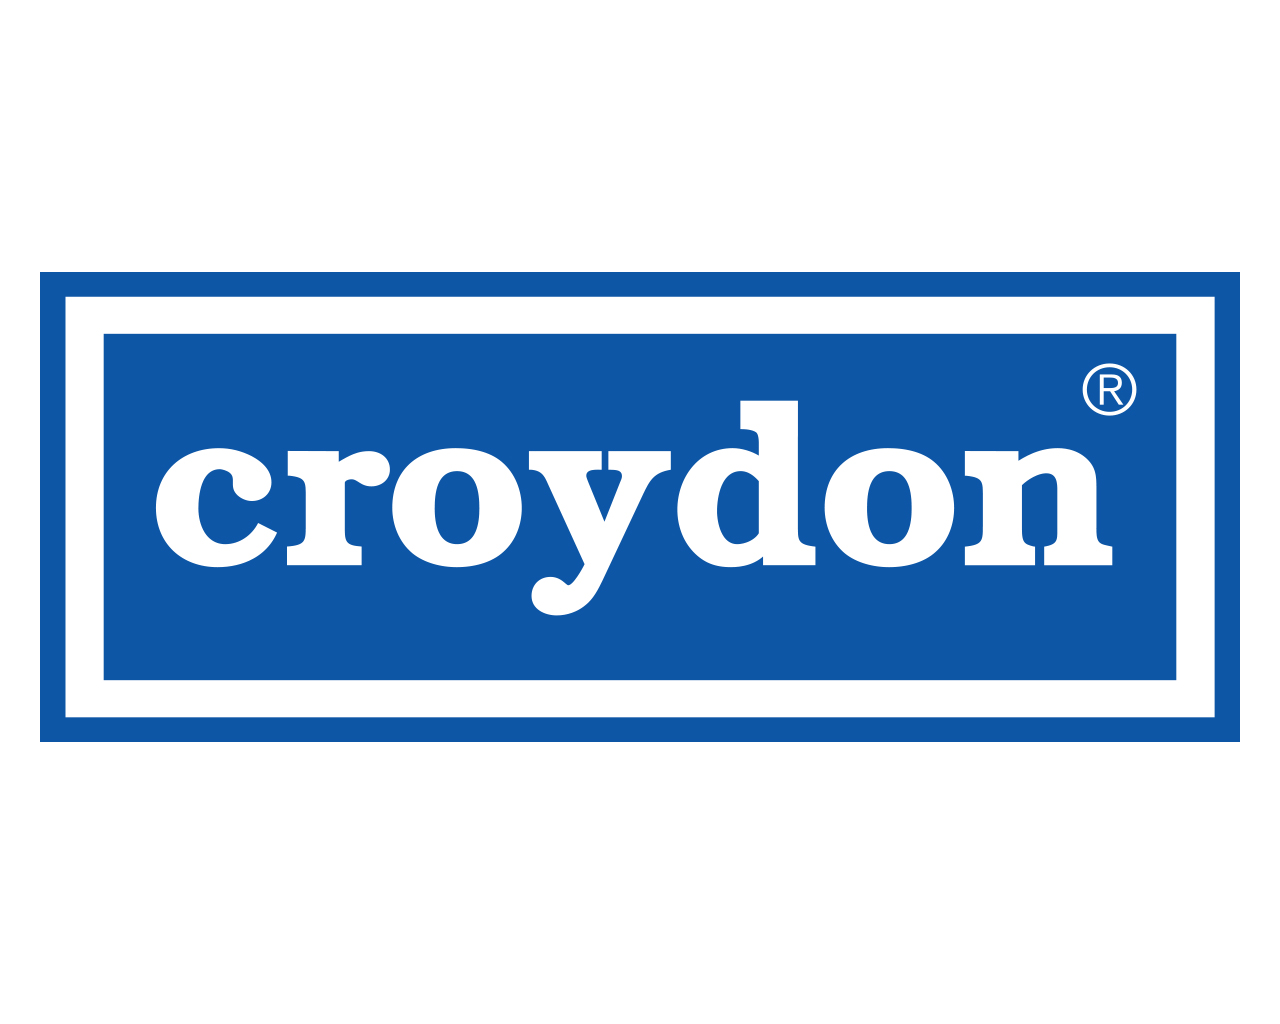 logo-croydon